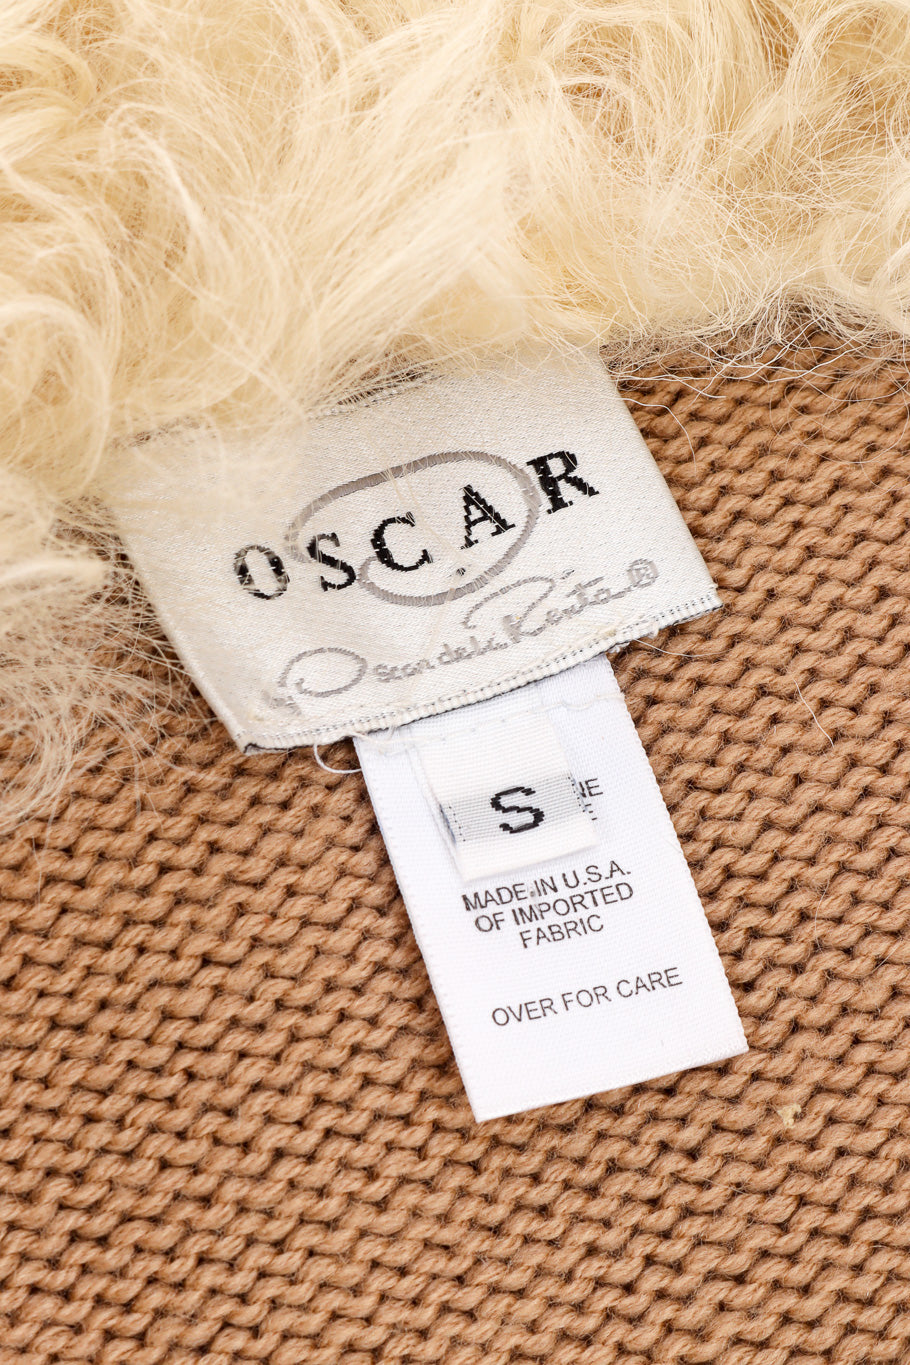 Lambsuede & Wool Knit Jacket by Oscar de la Renta label @recessla